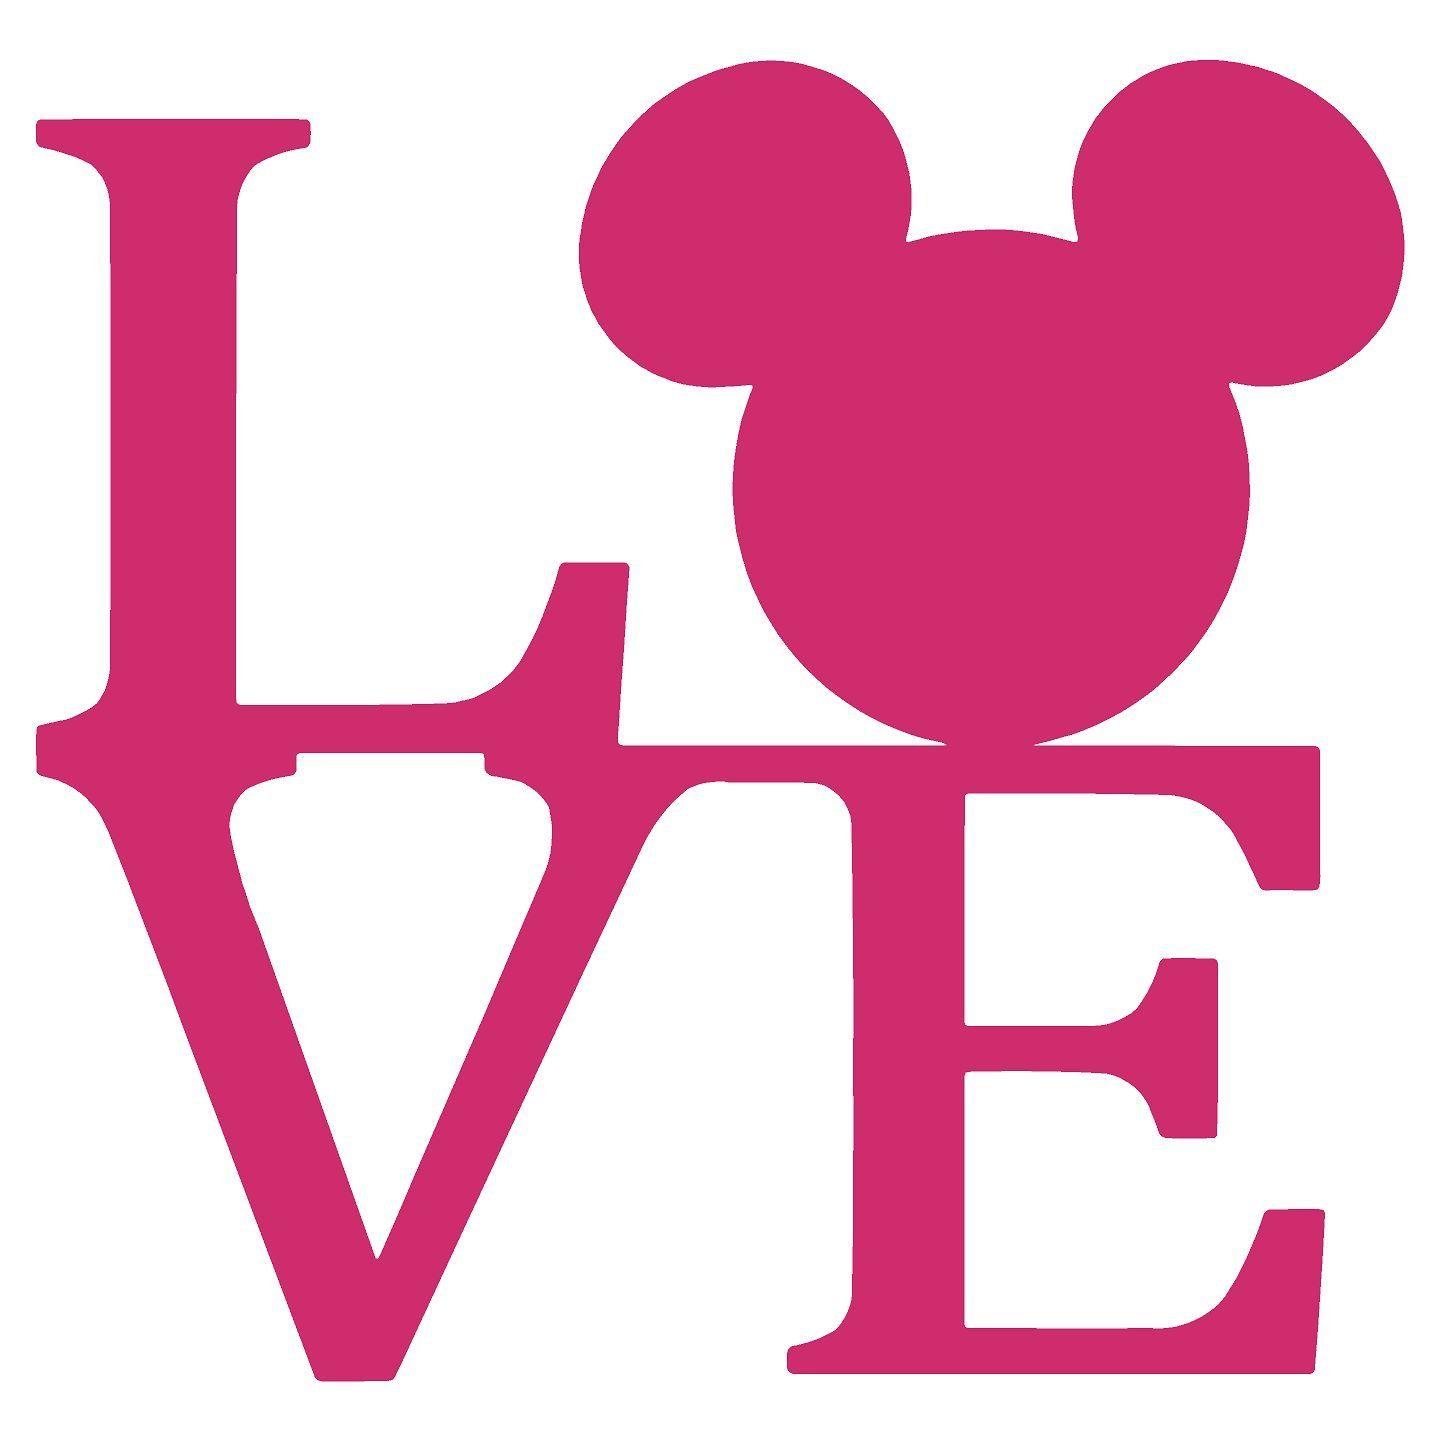 Mickey Mouse Love Logo - Amazon.com: Crawford Graphix Mickey Mouse Ears Love Logo - Disney ...